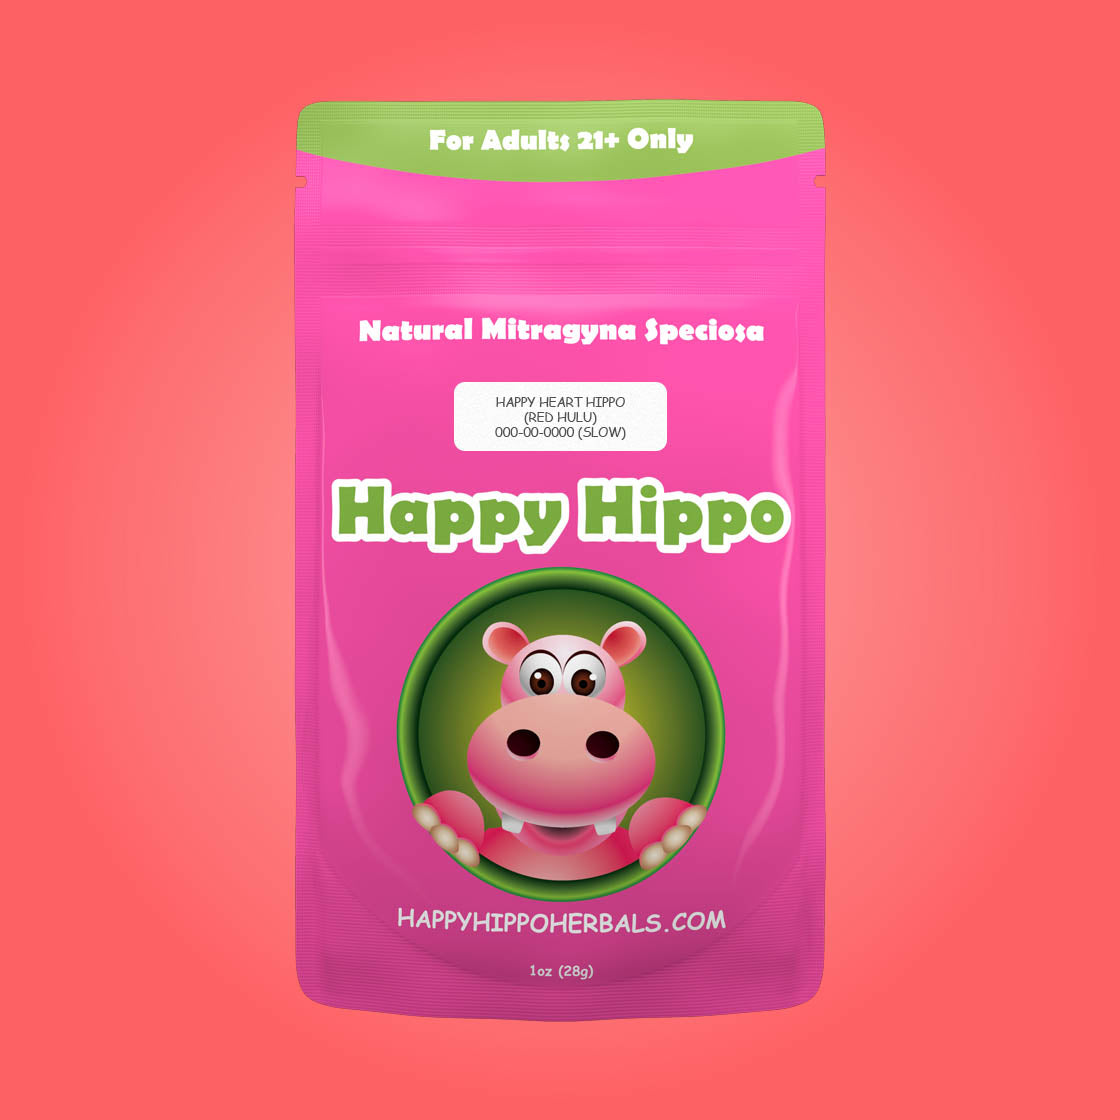 Product Image depicting a 1oz bag of Happy Hippo Red Vein Hulu Kratom Powder (Mitragyna Speciosa).